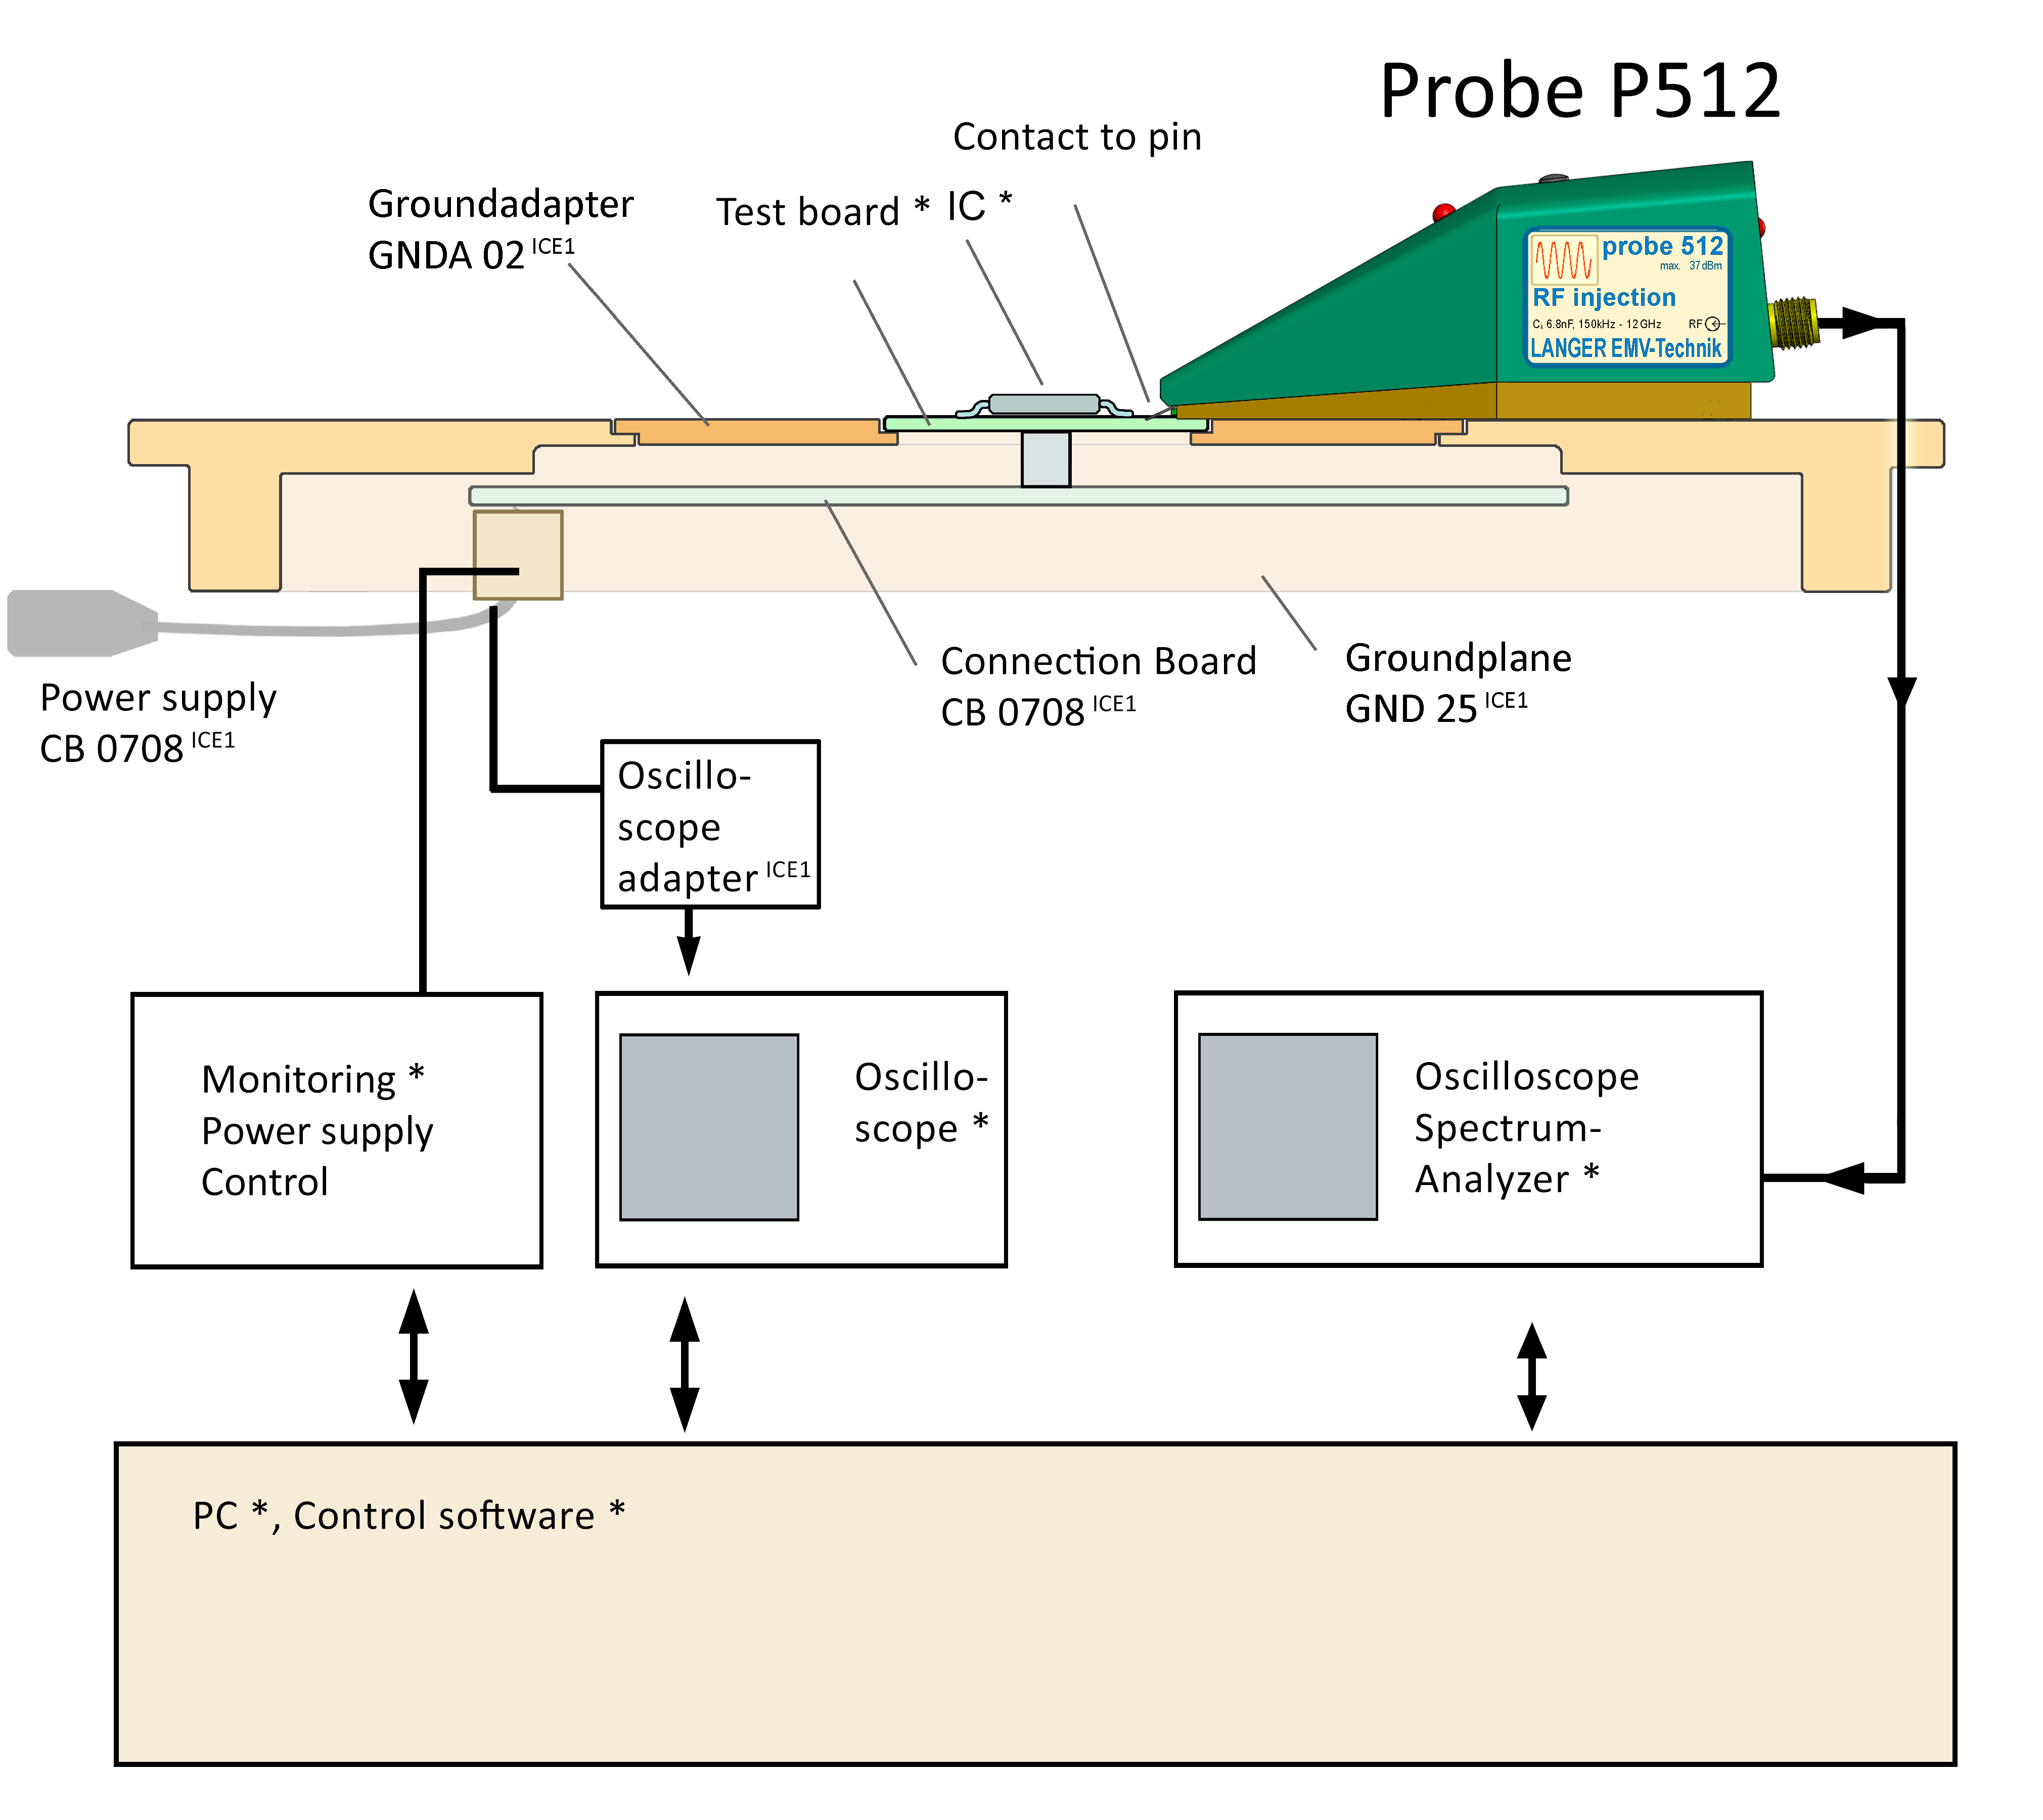 Schematc measurement setup for RF measurements with P512 probe